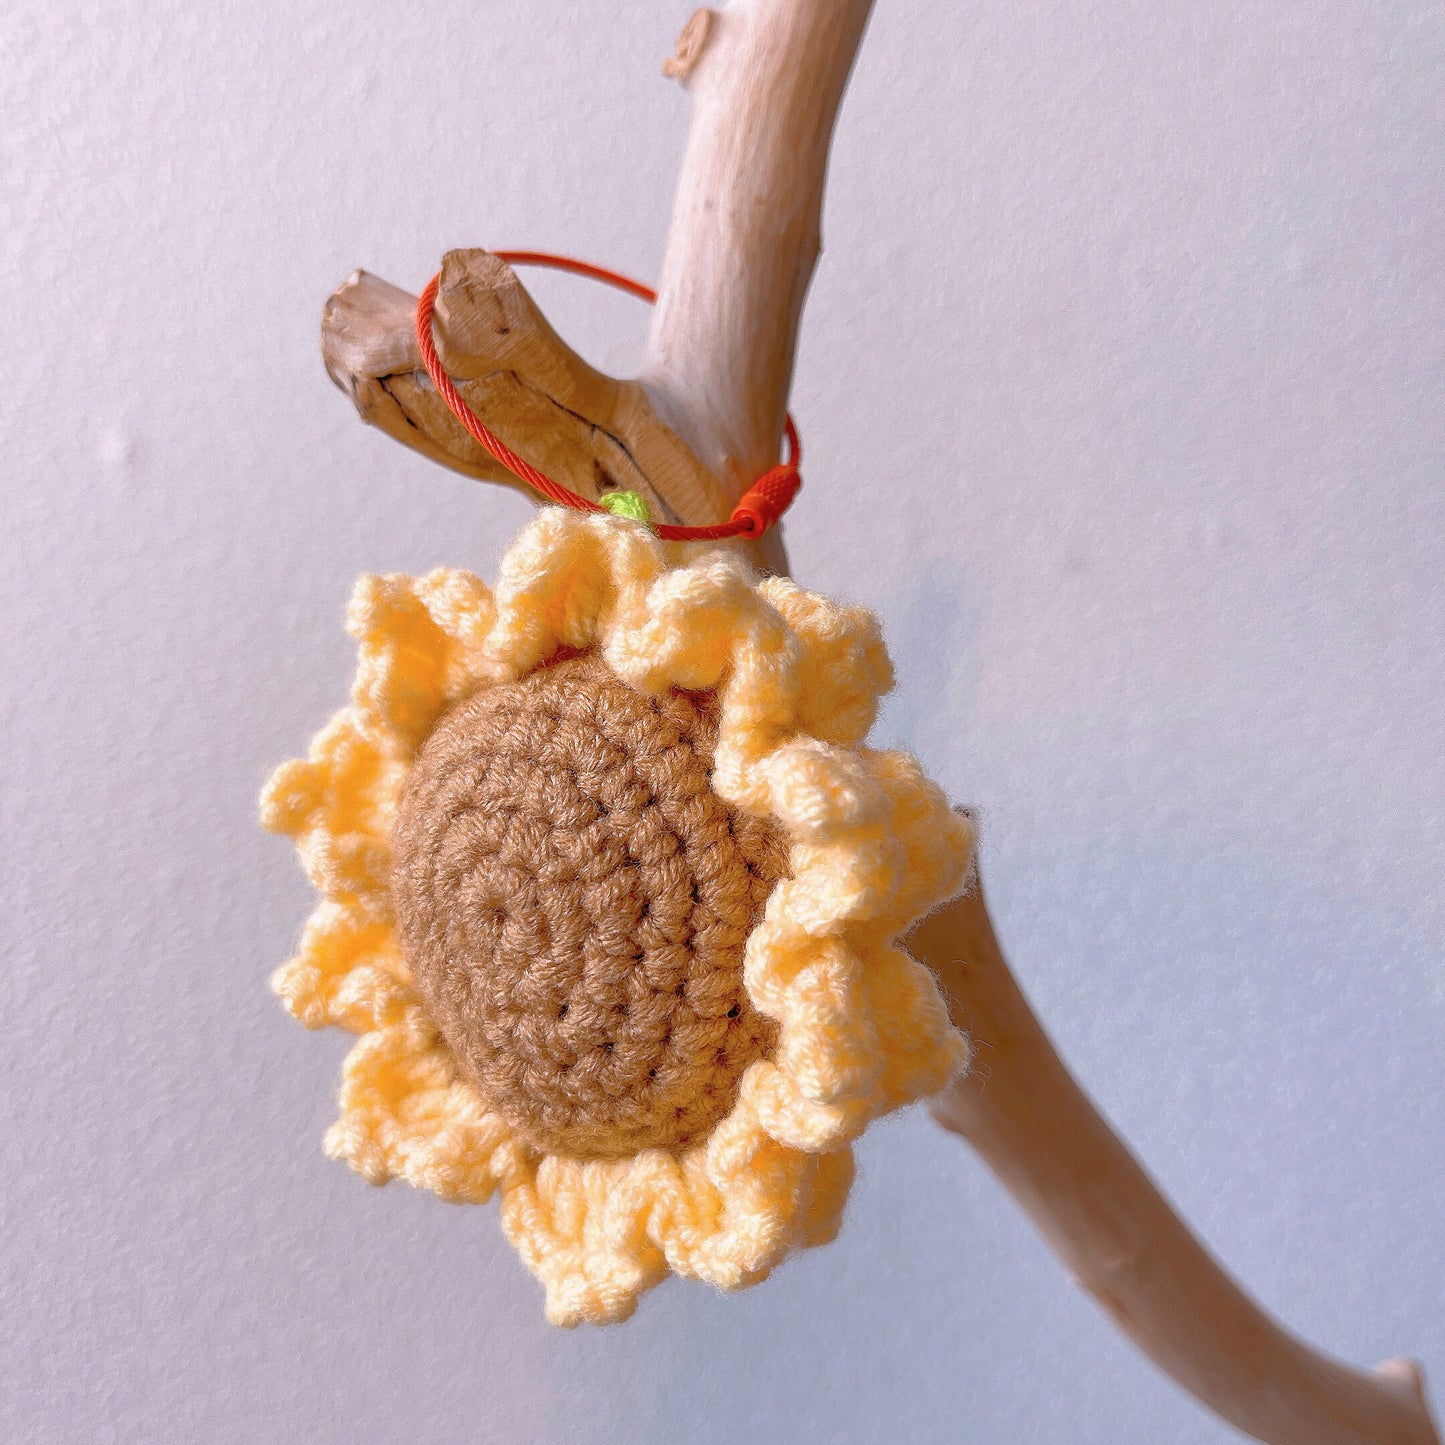 Handmade Crochet Ornament - Everlasting Decoration for Holiday - Christmas Tree - Teacher Gift - Handcrafted Fruit & Flower Decor for Office